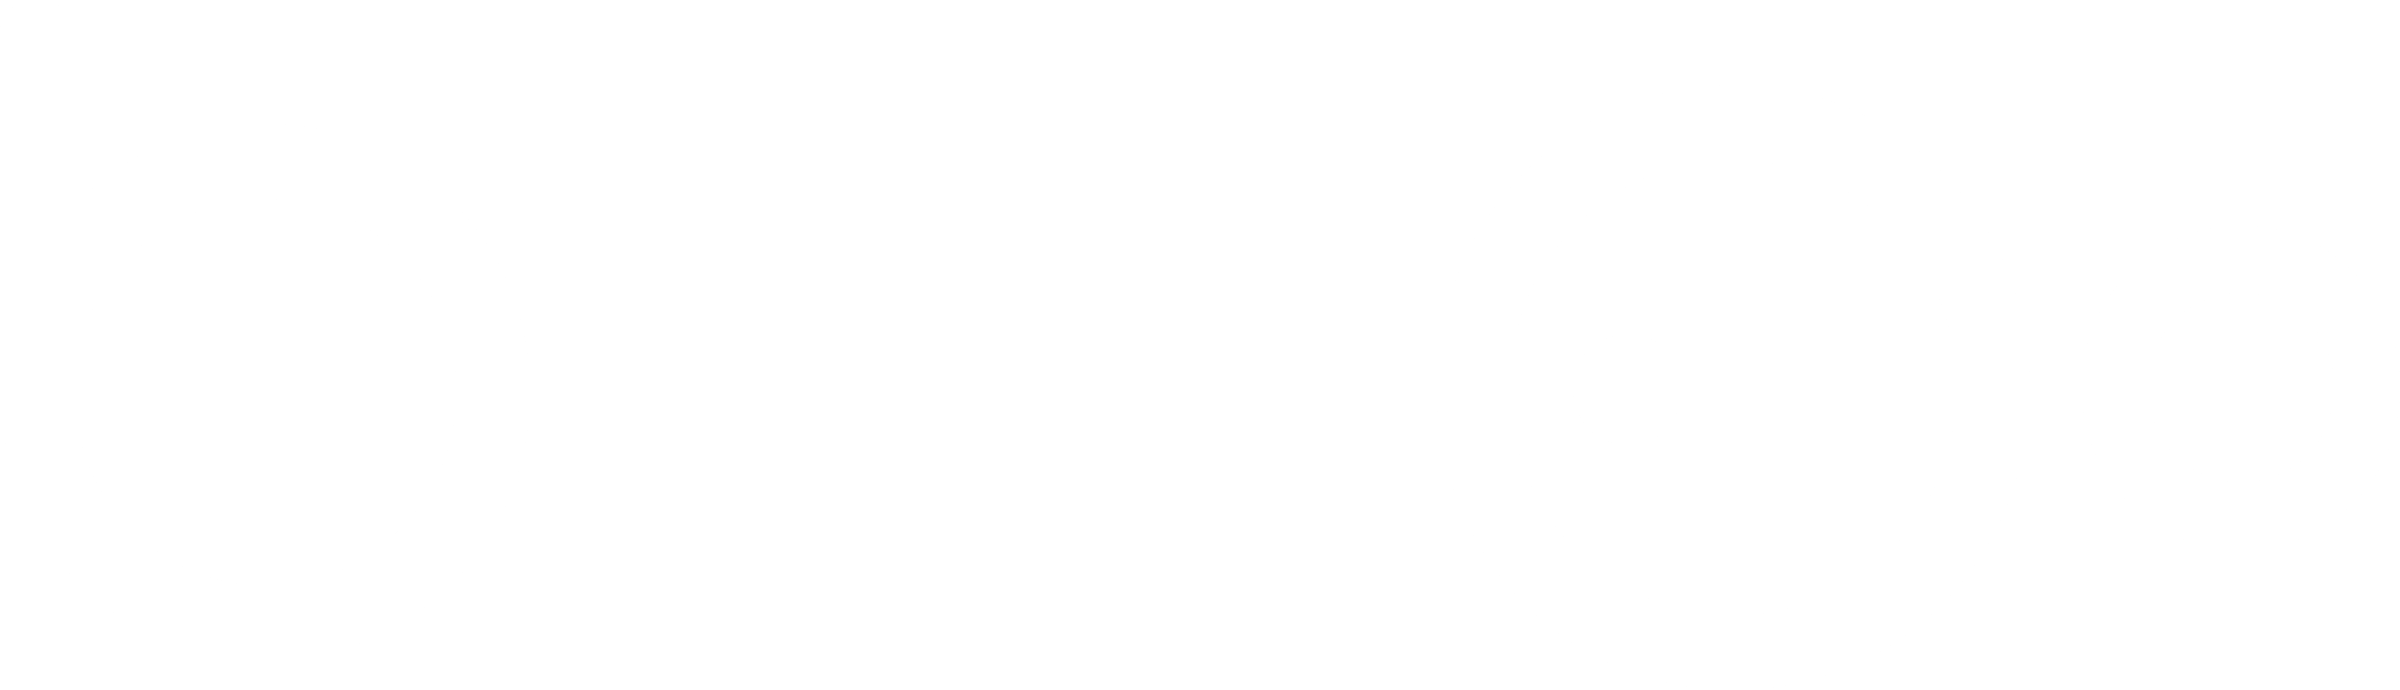 Badoo Logo - Badoo Logo PNG Transparent & SVG Vector - Freebie Supply